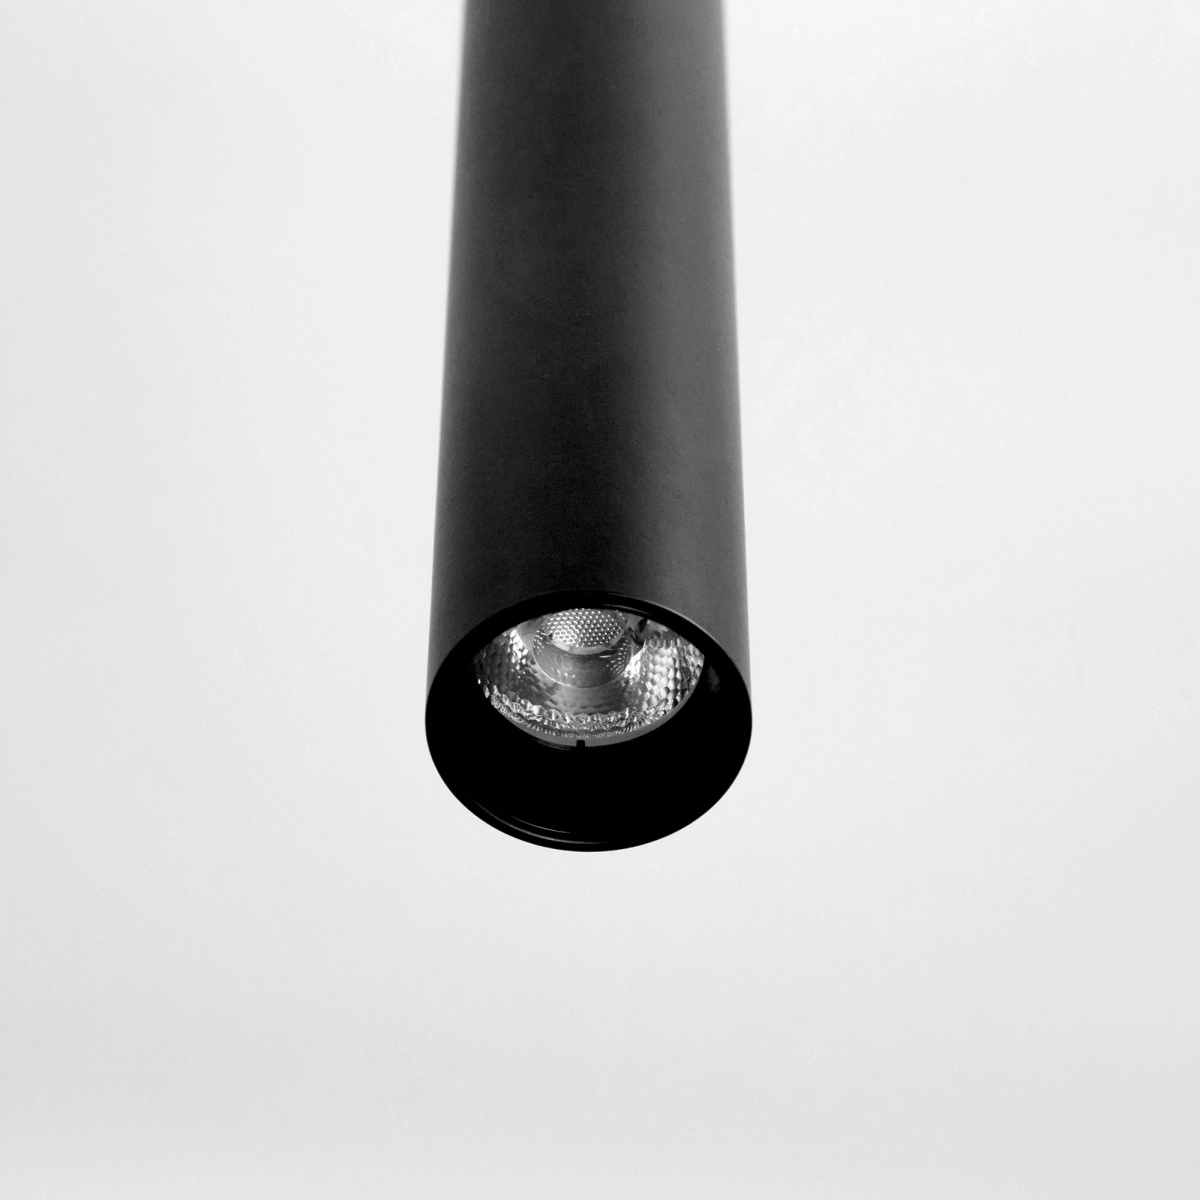 подвесной светильник citilux тубус (tubus), артикул CL01PBL071N